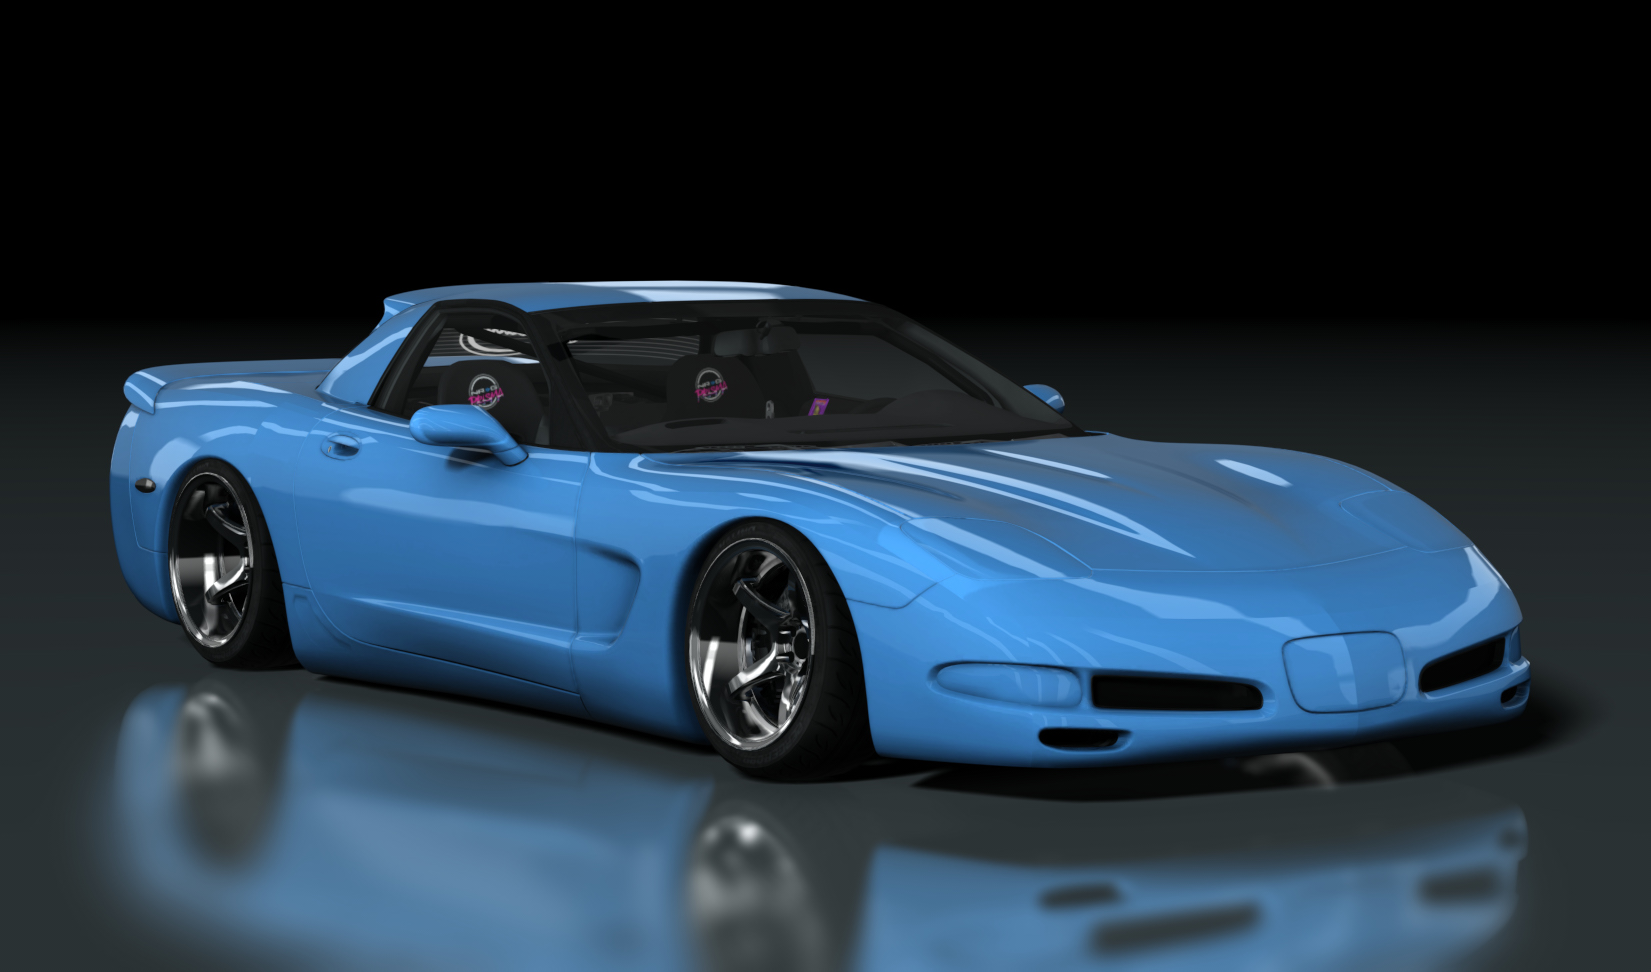 C5 Corvette mp4 Street Car, skin Nassau Blue